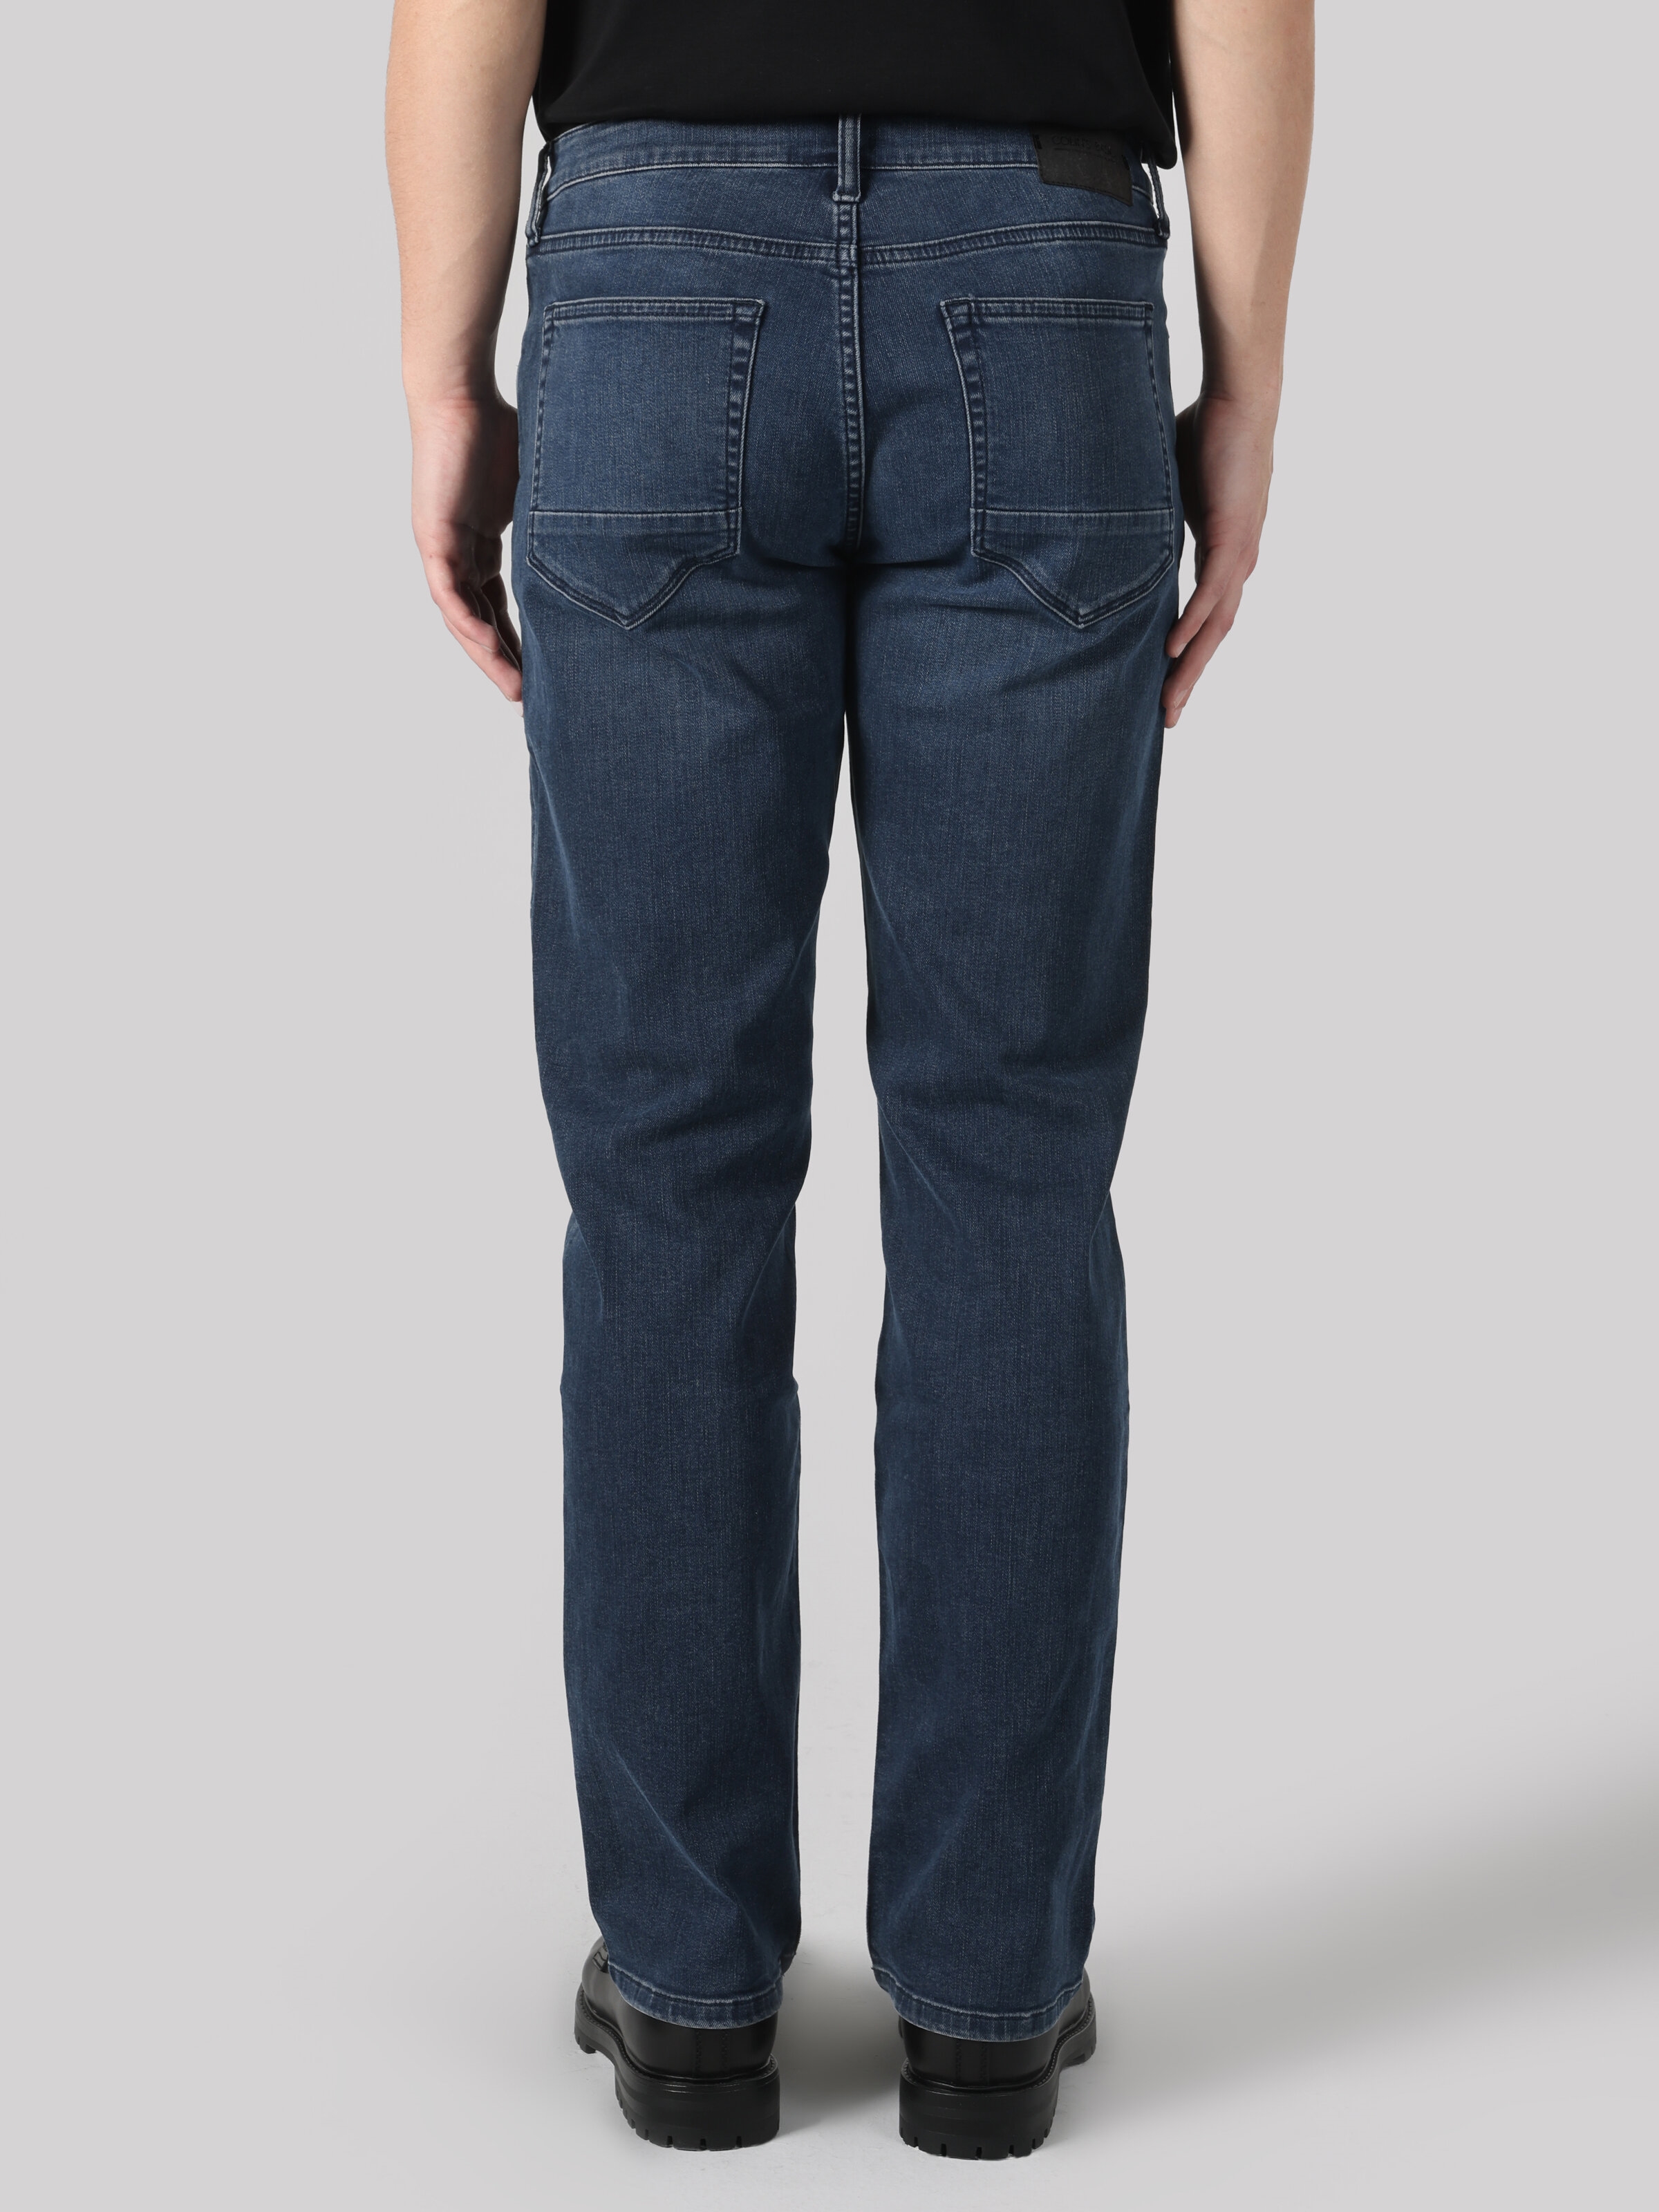 Homme - Pantalons, jeans